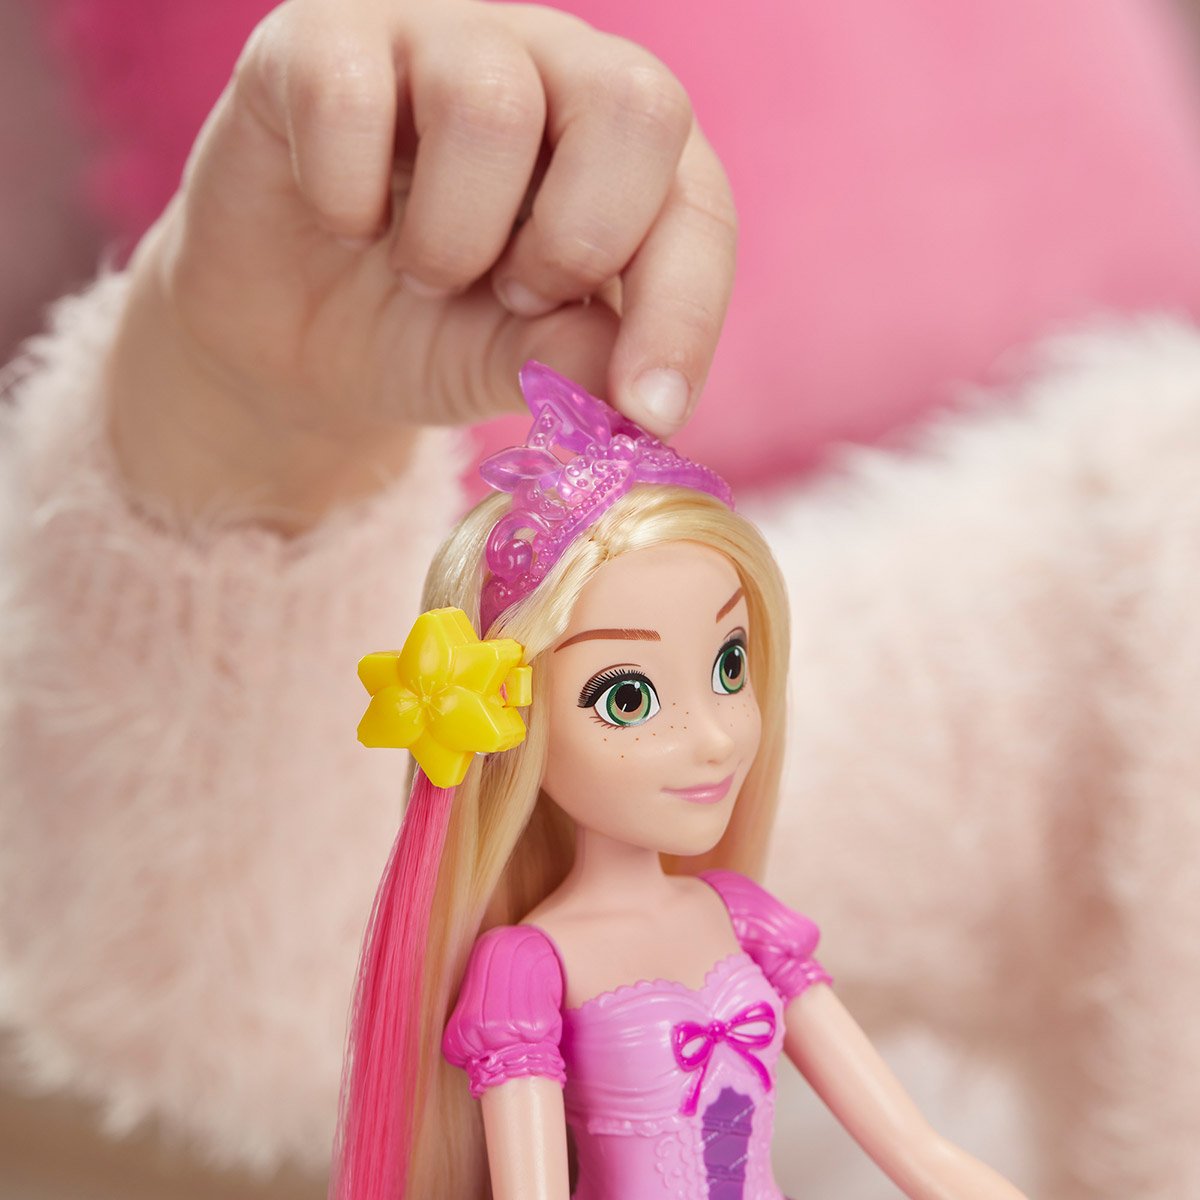 Poupée géante princesse DISNEY Raiponce à coiffer 85 cm - DisneySho